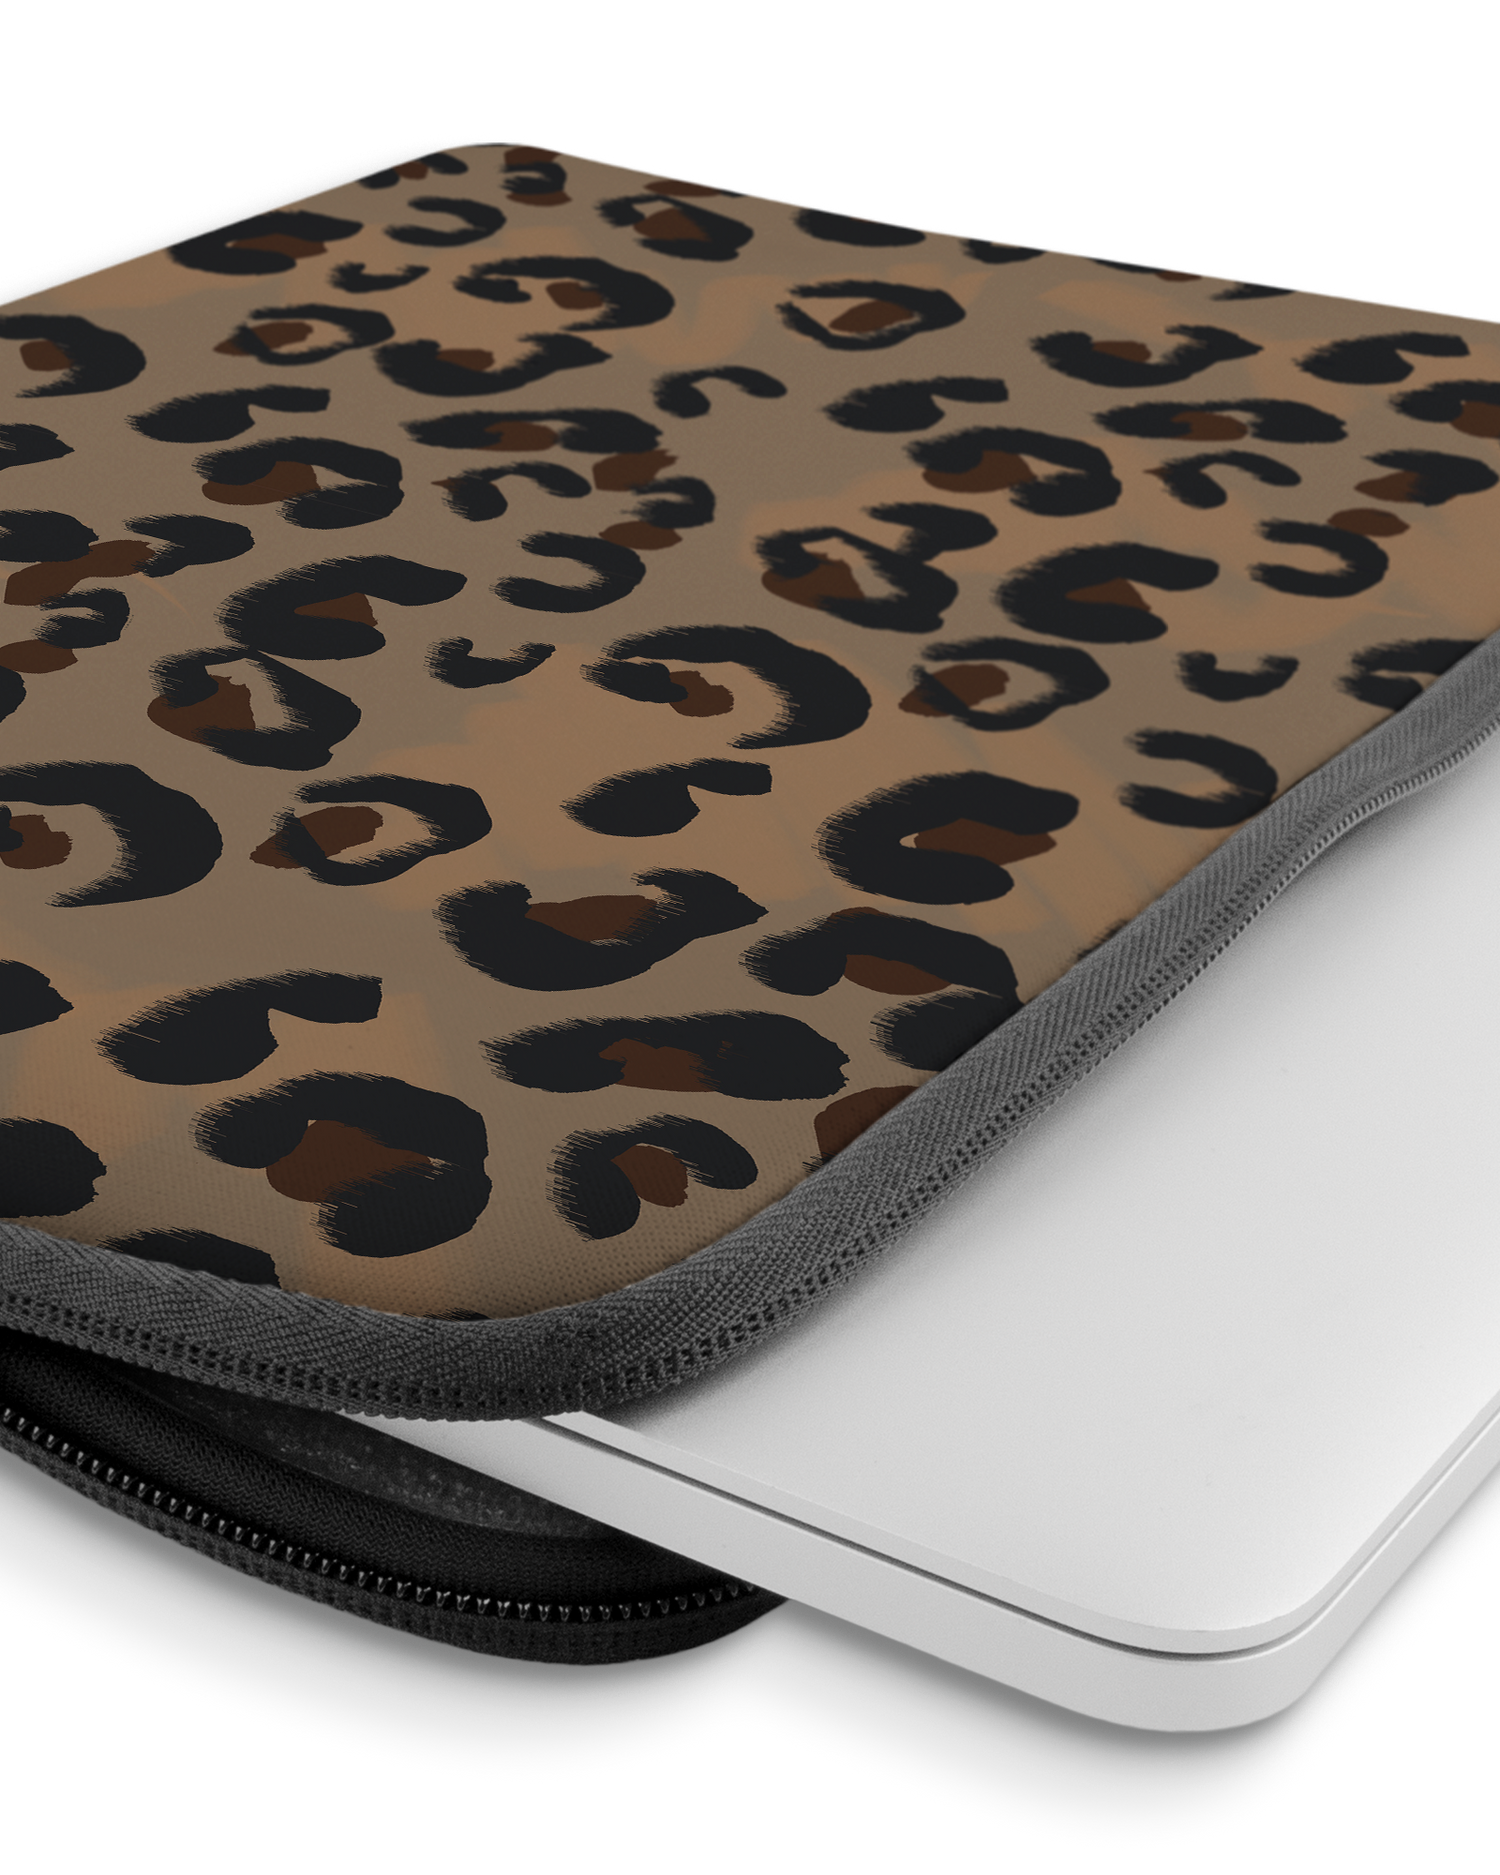 Leopard Repeat Laptophülle 14 Zoll mit Gerät im Inneren